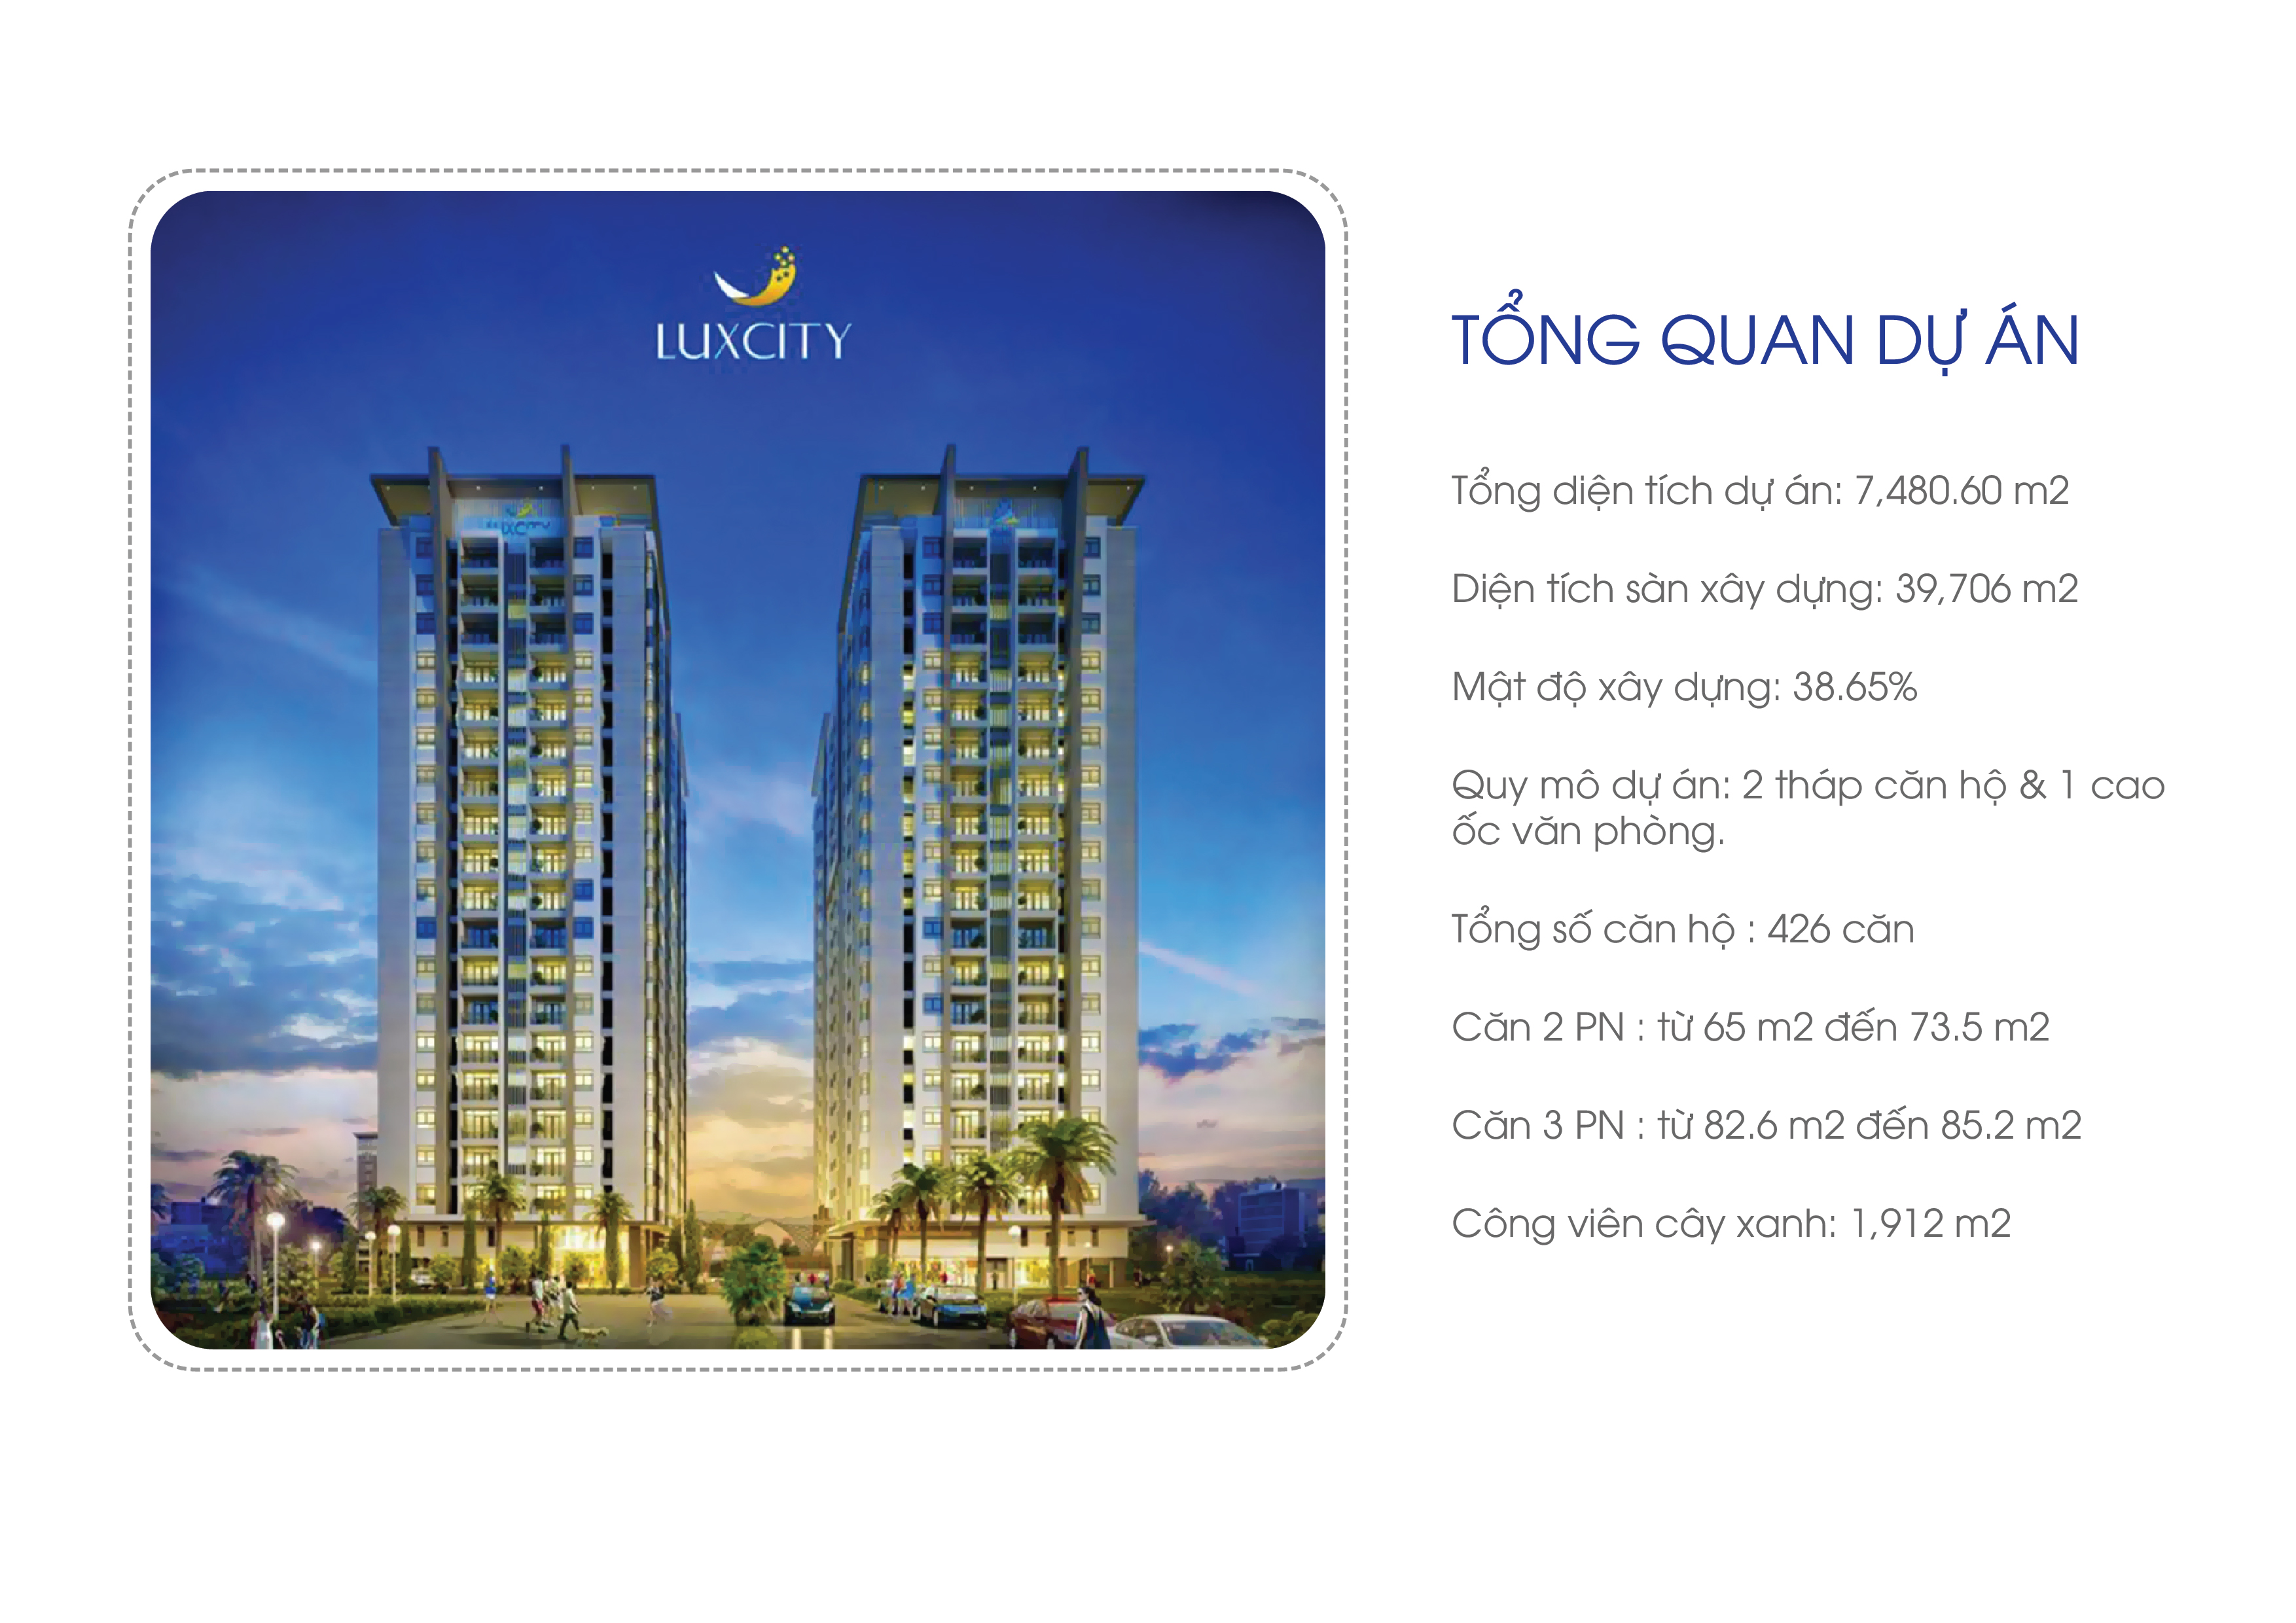 https://cdn.realtorvietnam.com/uploads/real_estate/luxcity-tien-ich-ngoai-khu03_1475213343.jpg